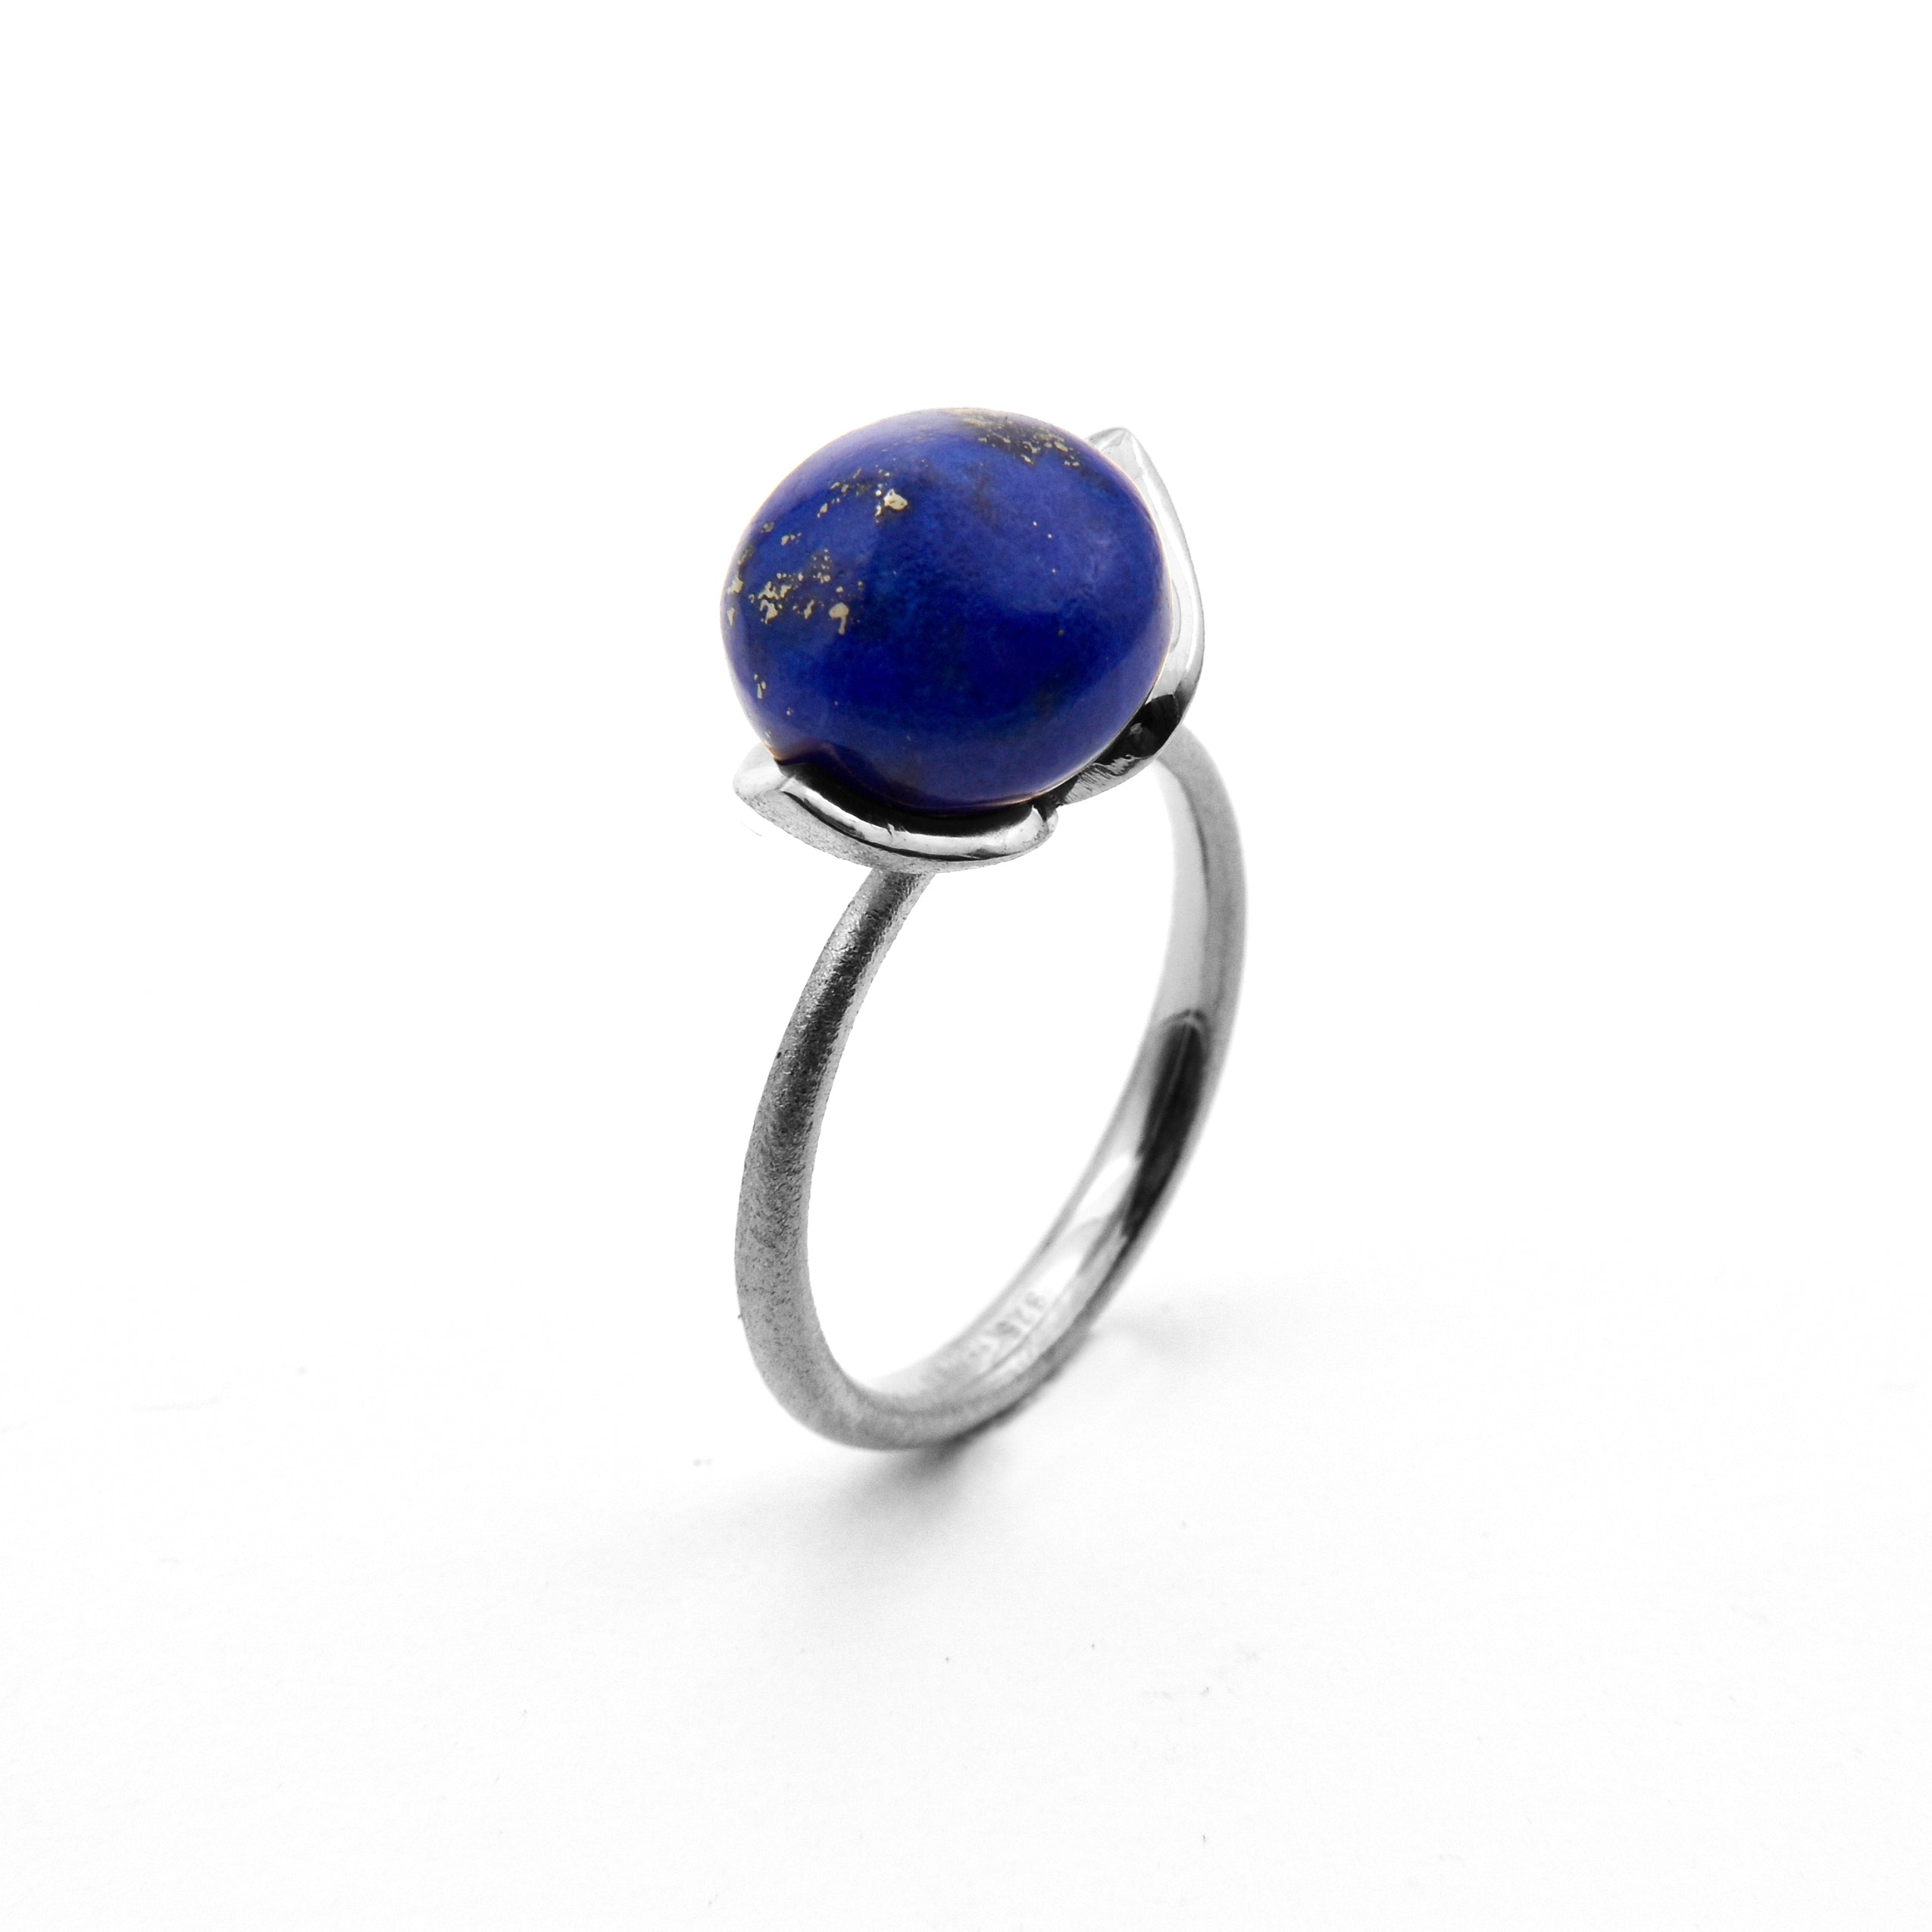 Dolce ring "medium" with lapis lazuli 925/-